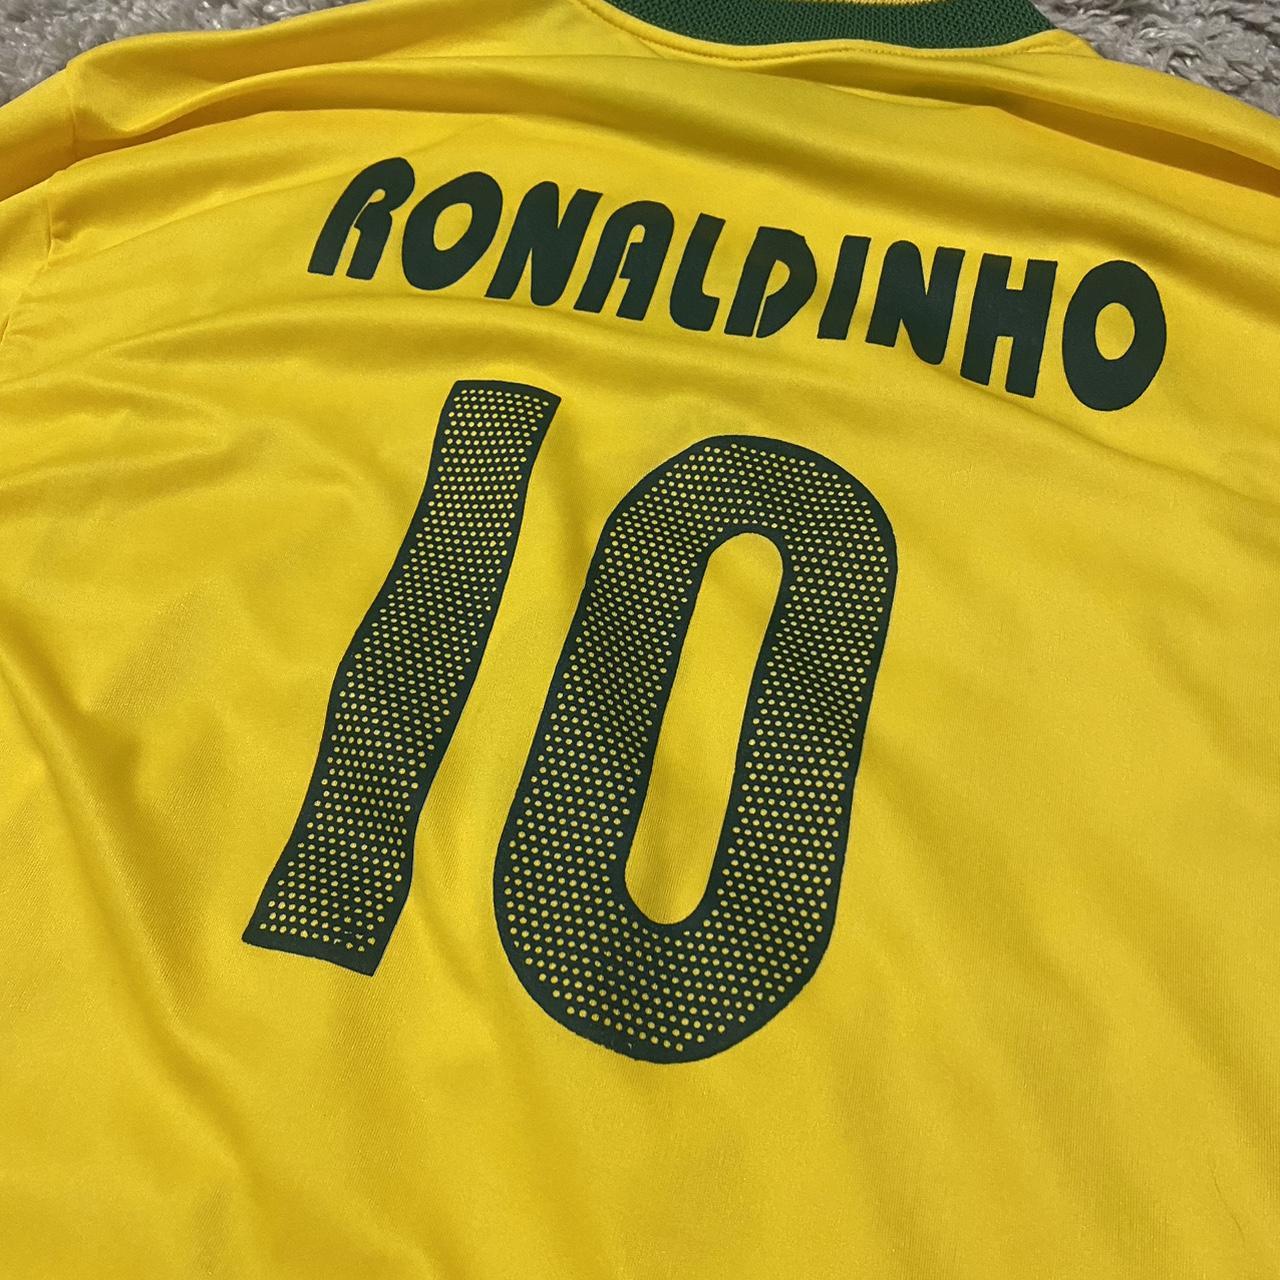 Vintage Nike Brasil Ronaldinho Shirt - Depop